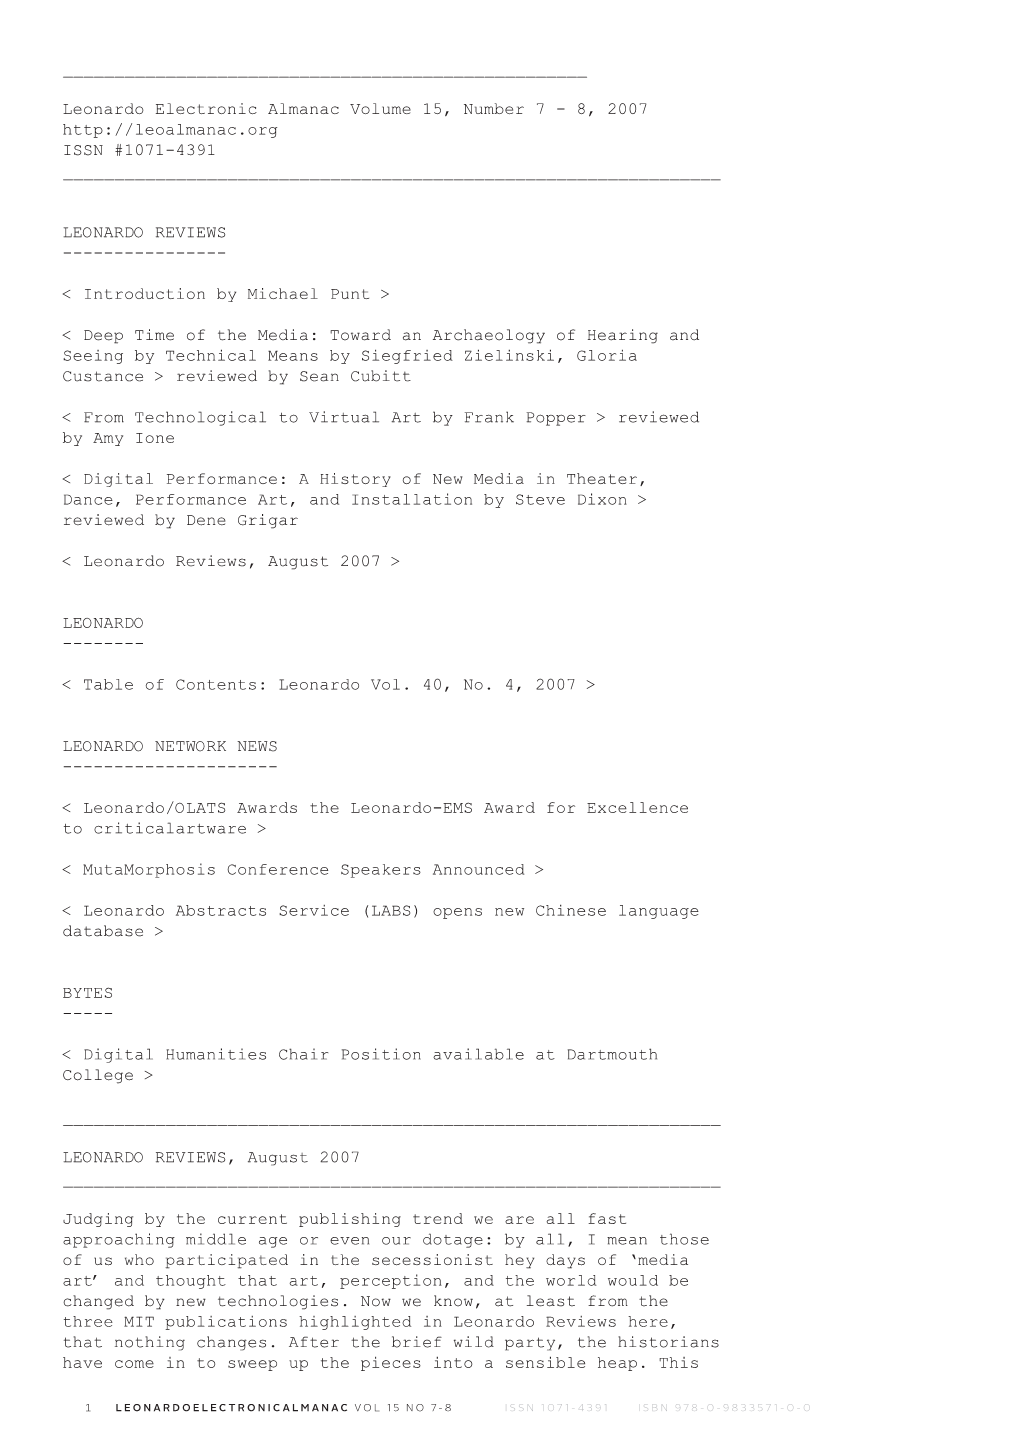 Leonardo Electronic Almanac Volume 15, Number 7 - 8, 2007 ISSN #1071-4391 ______